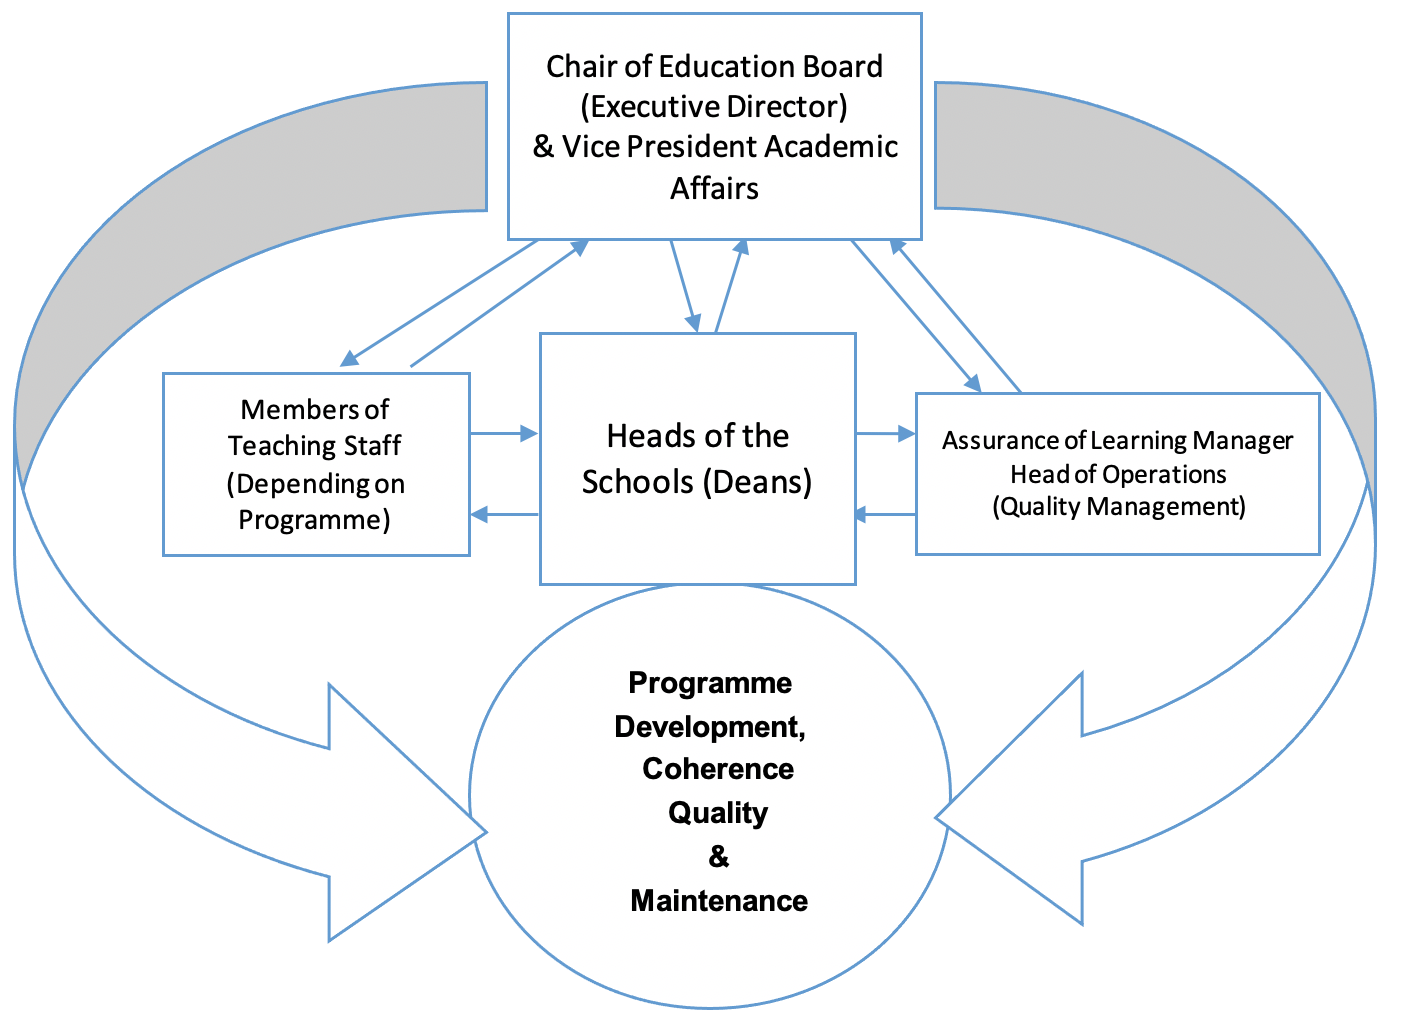 The Education Board